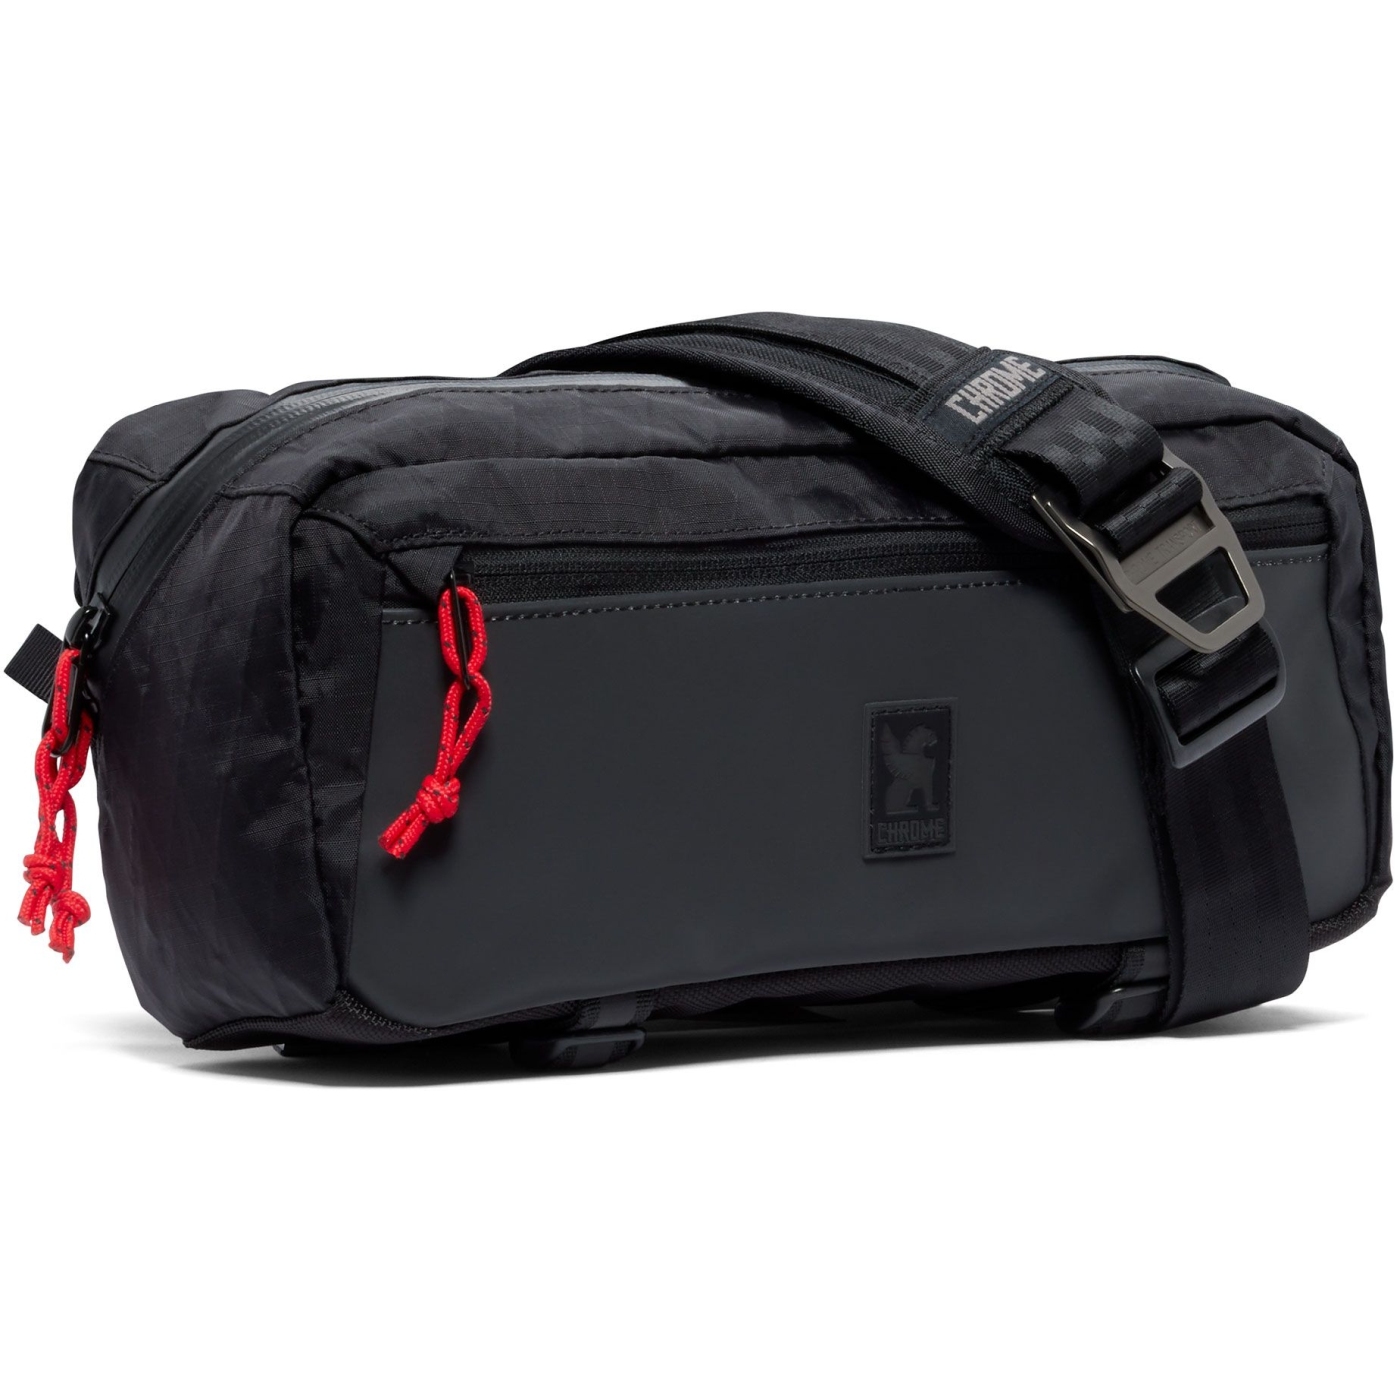 Produktbild von CHROME Mini Kadet Sling Bag - Umhängetasche - 5 L - Black XRF Reflective